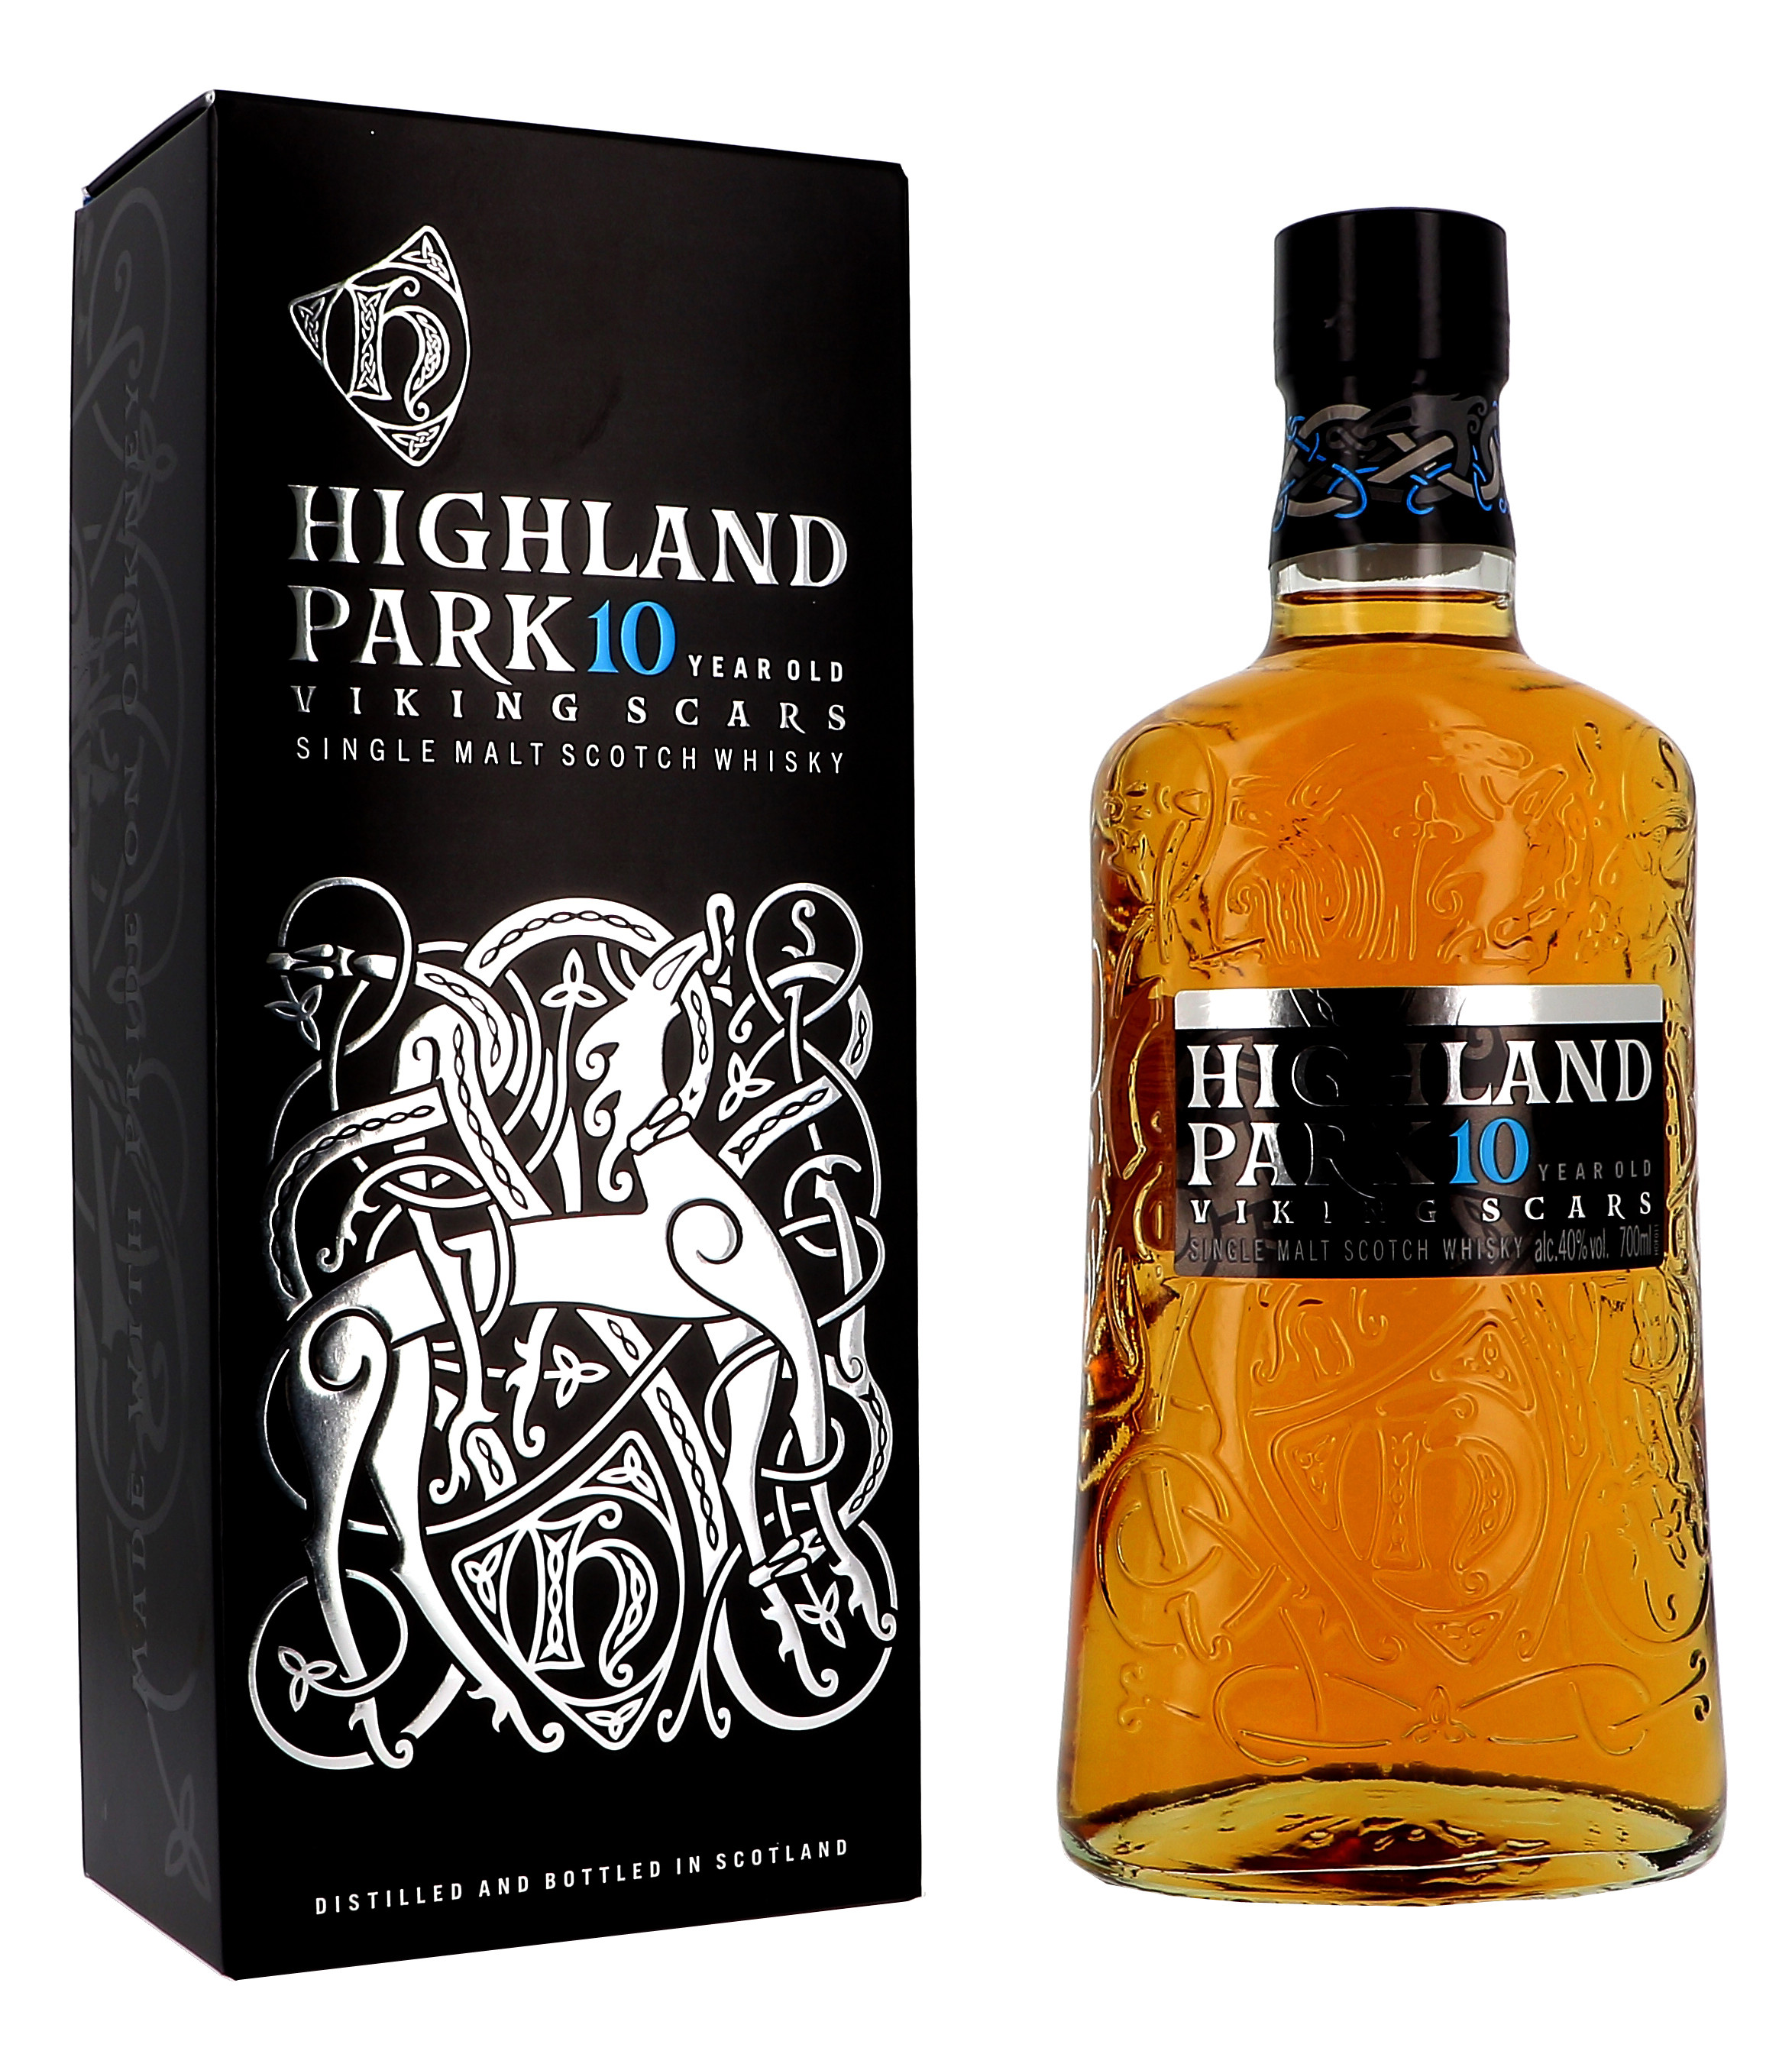 Highland Park 10 Years Viking Scars 70cl 40% Orkney Islands Single Malt Scotch Whisky 